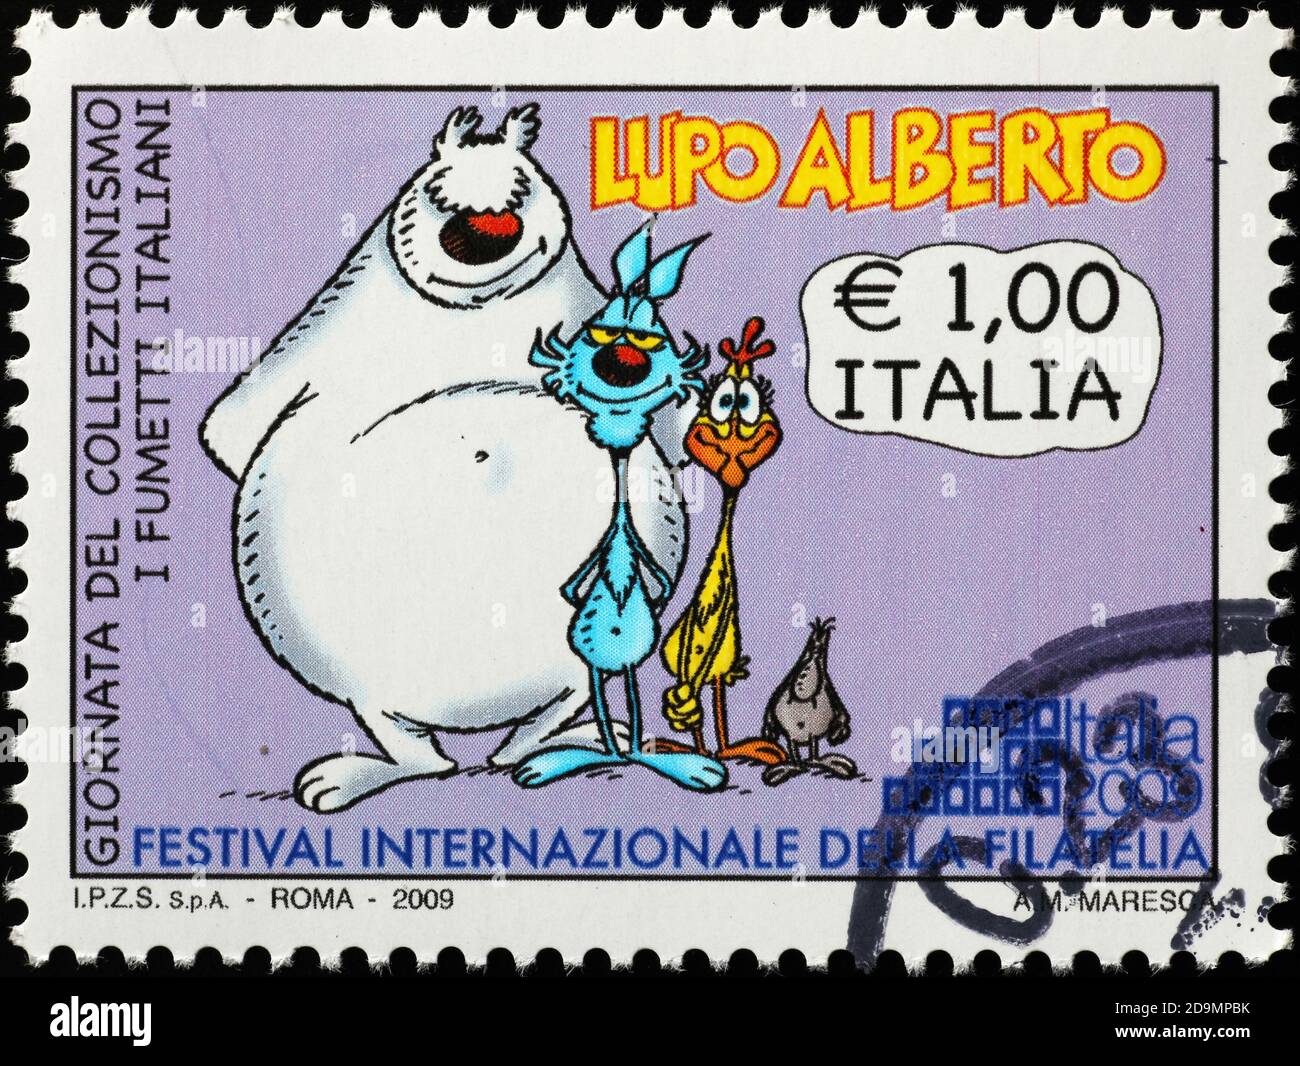 Cartoon Lupo Alberto on italian postage stamp Stock Photo - Alamy